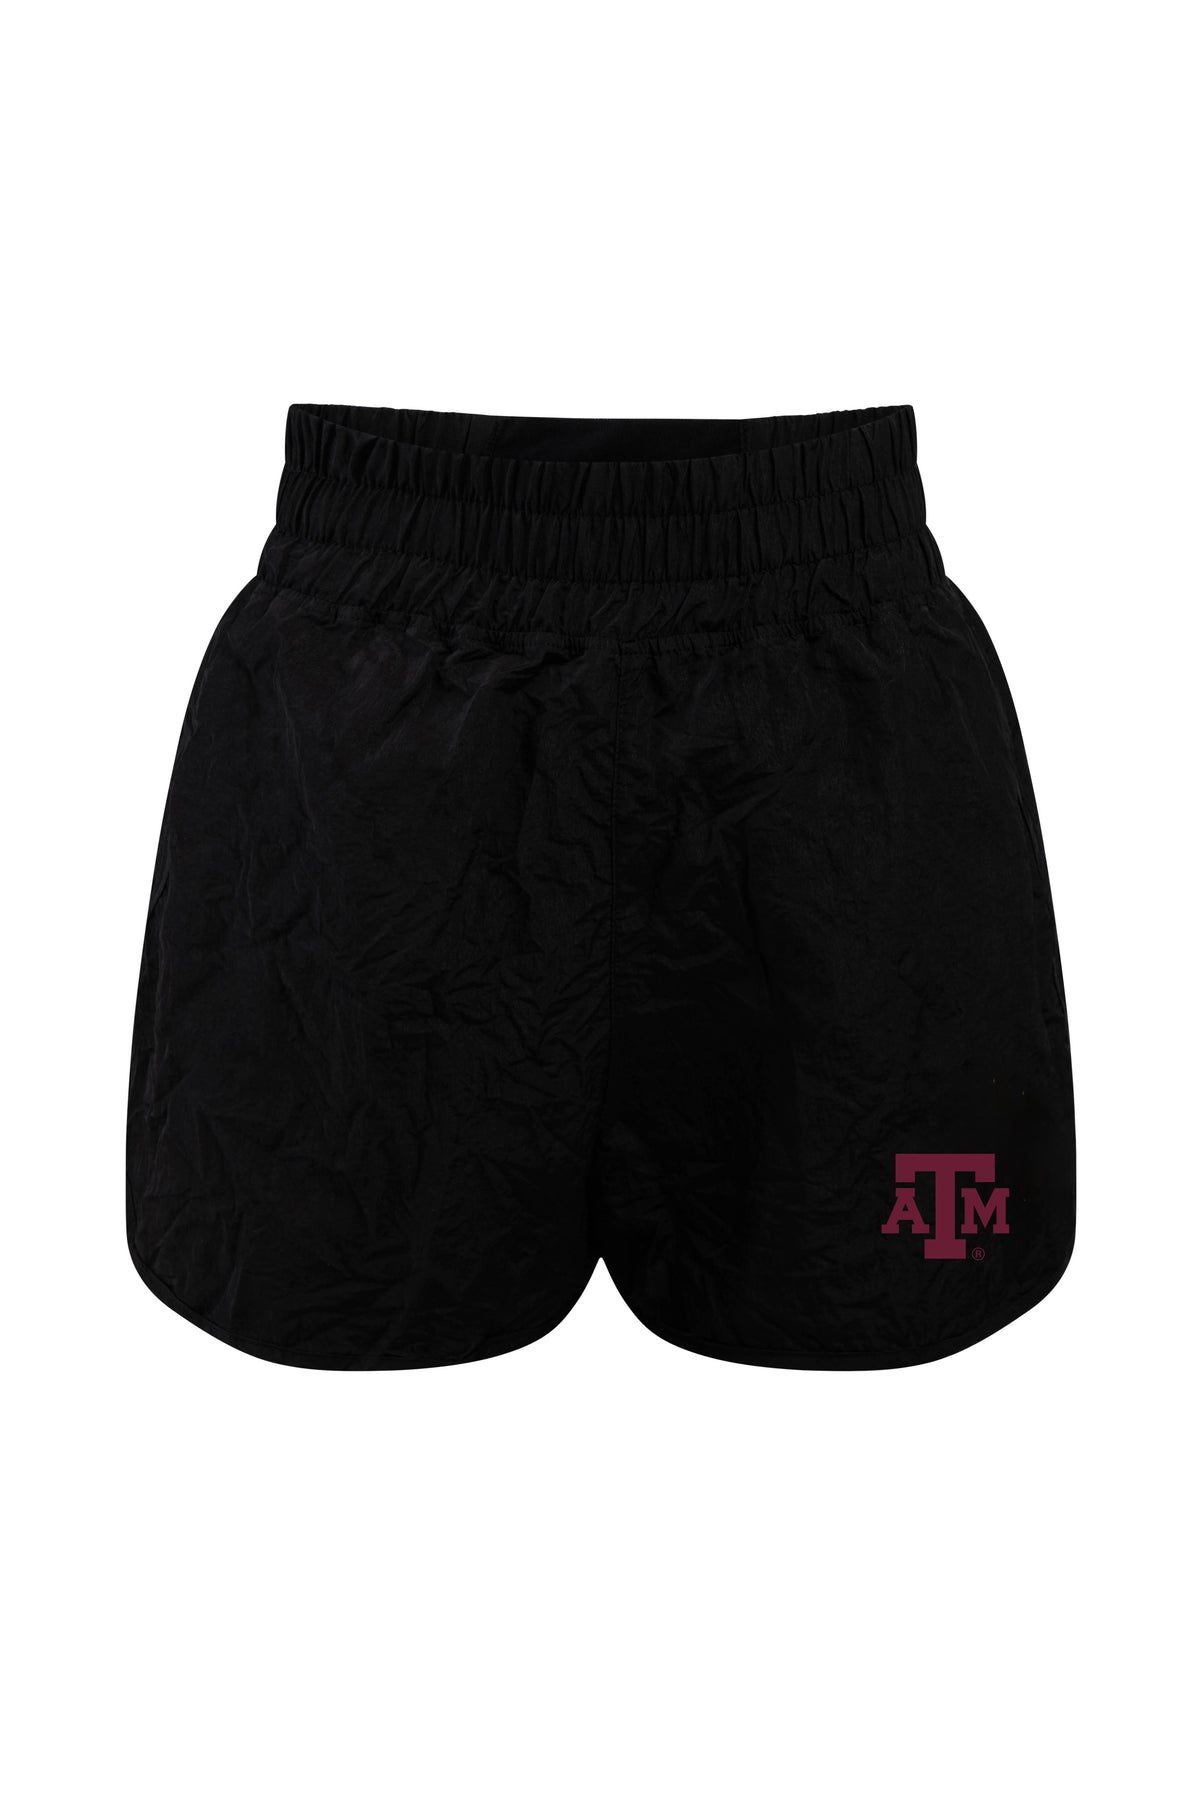 Texas A&M University Boxer Short